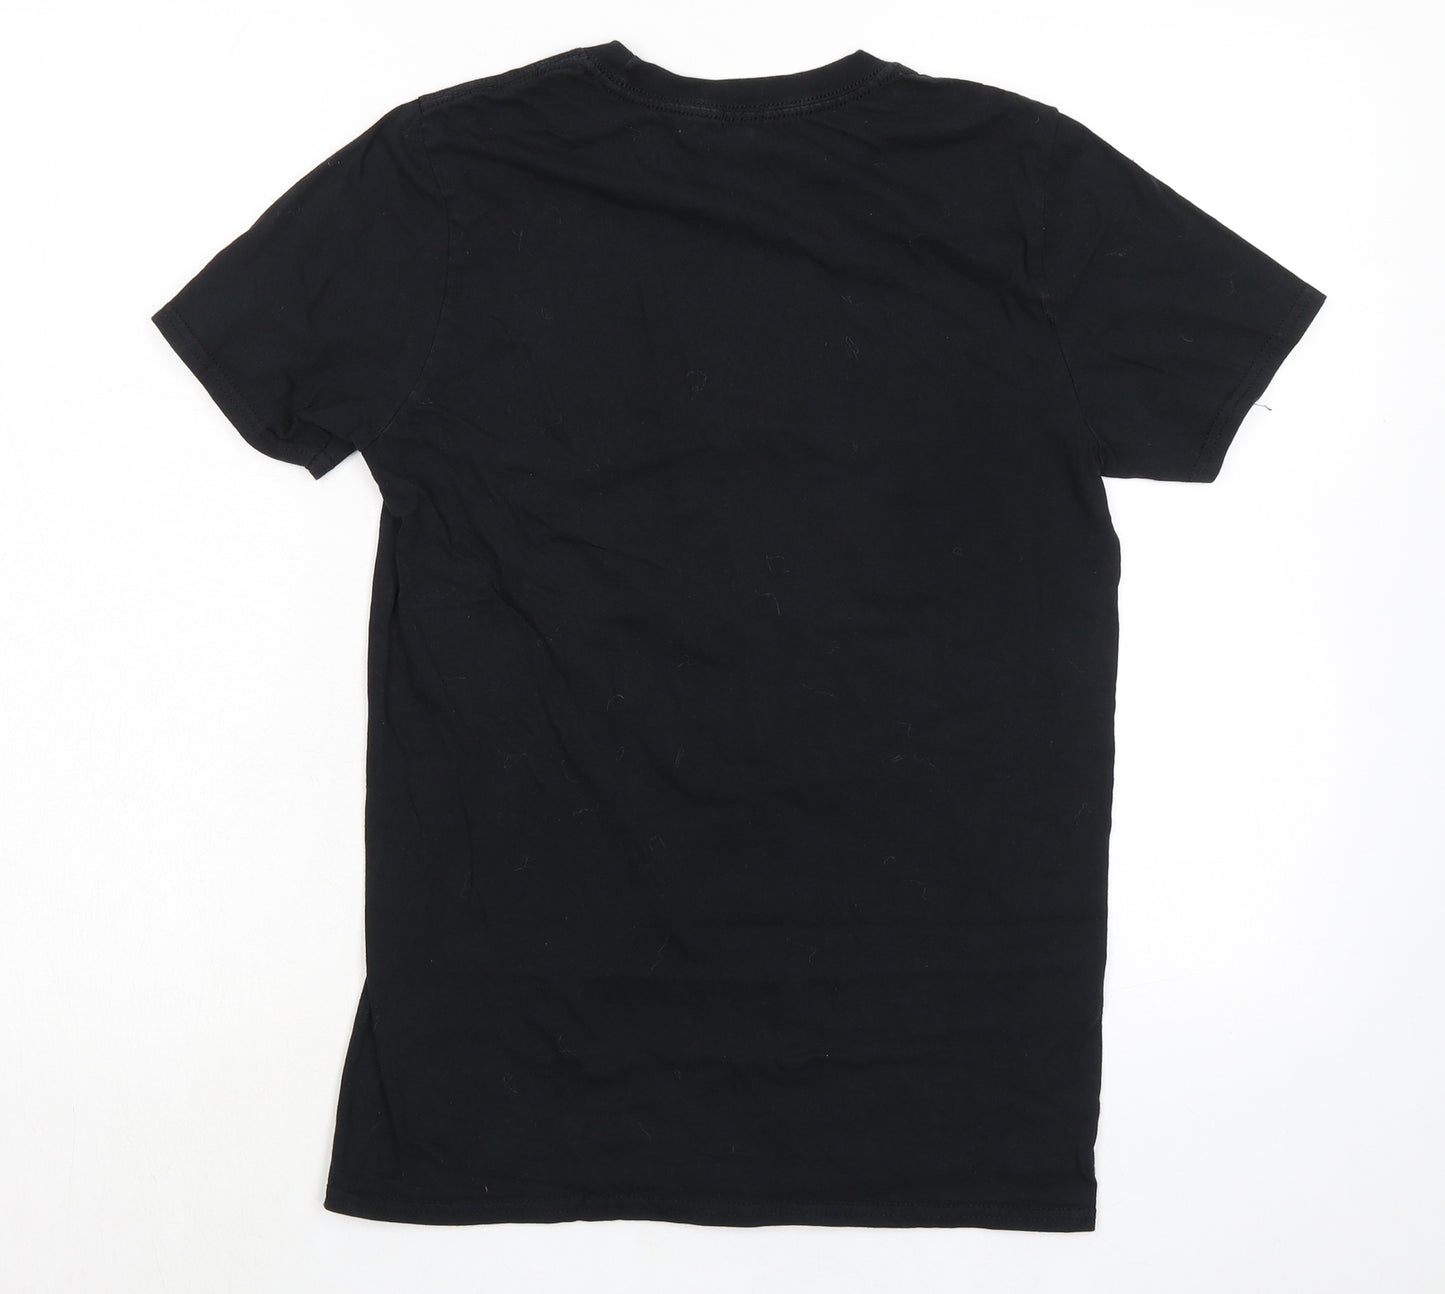 River Island Womens Black 100% Cotton Basic T-Shirt Size 8 Round Neck - After Dark